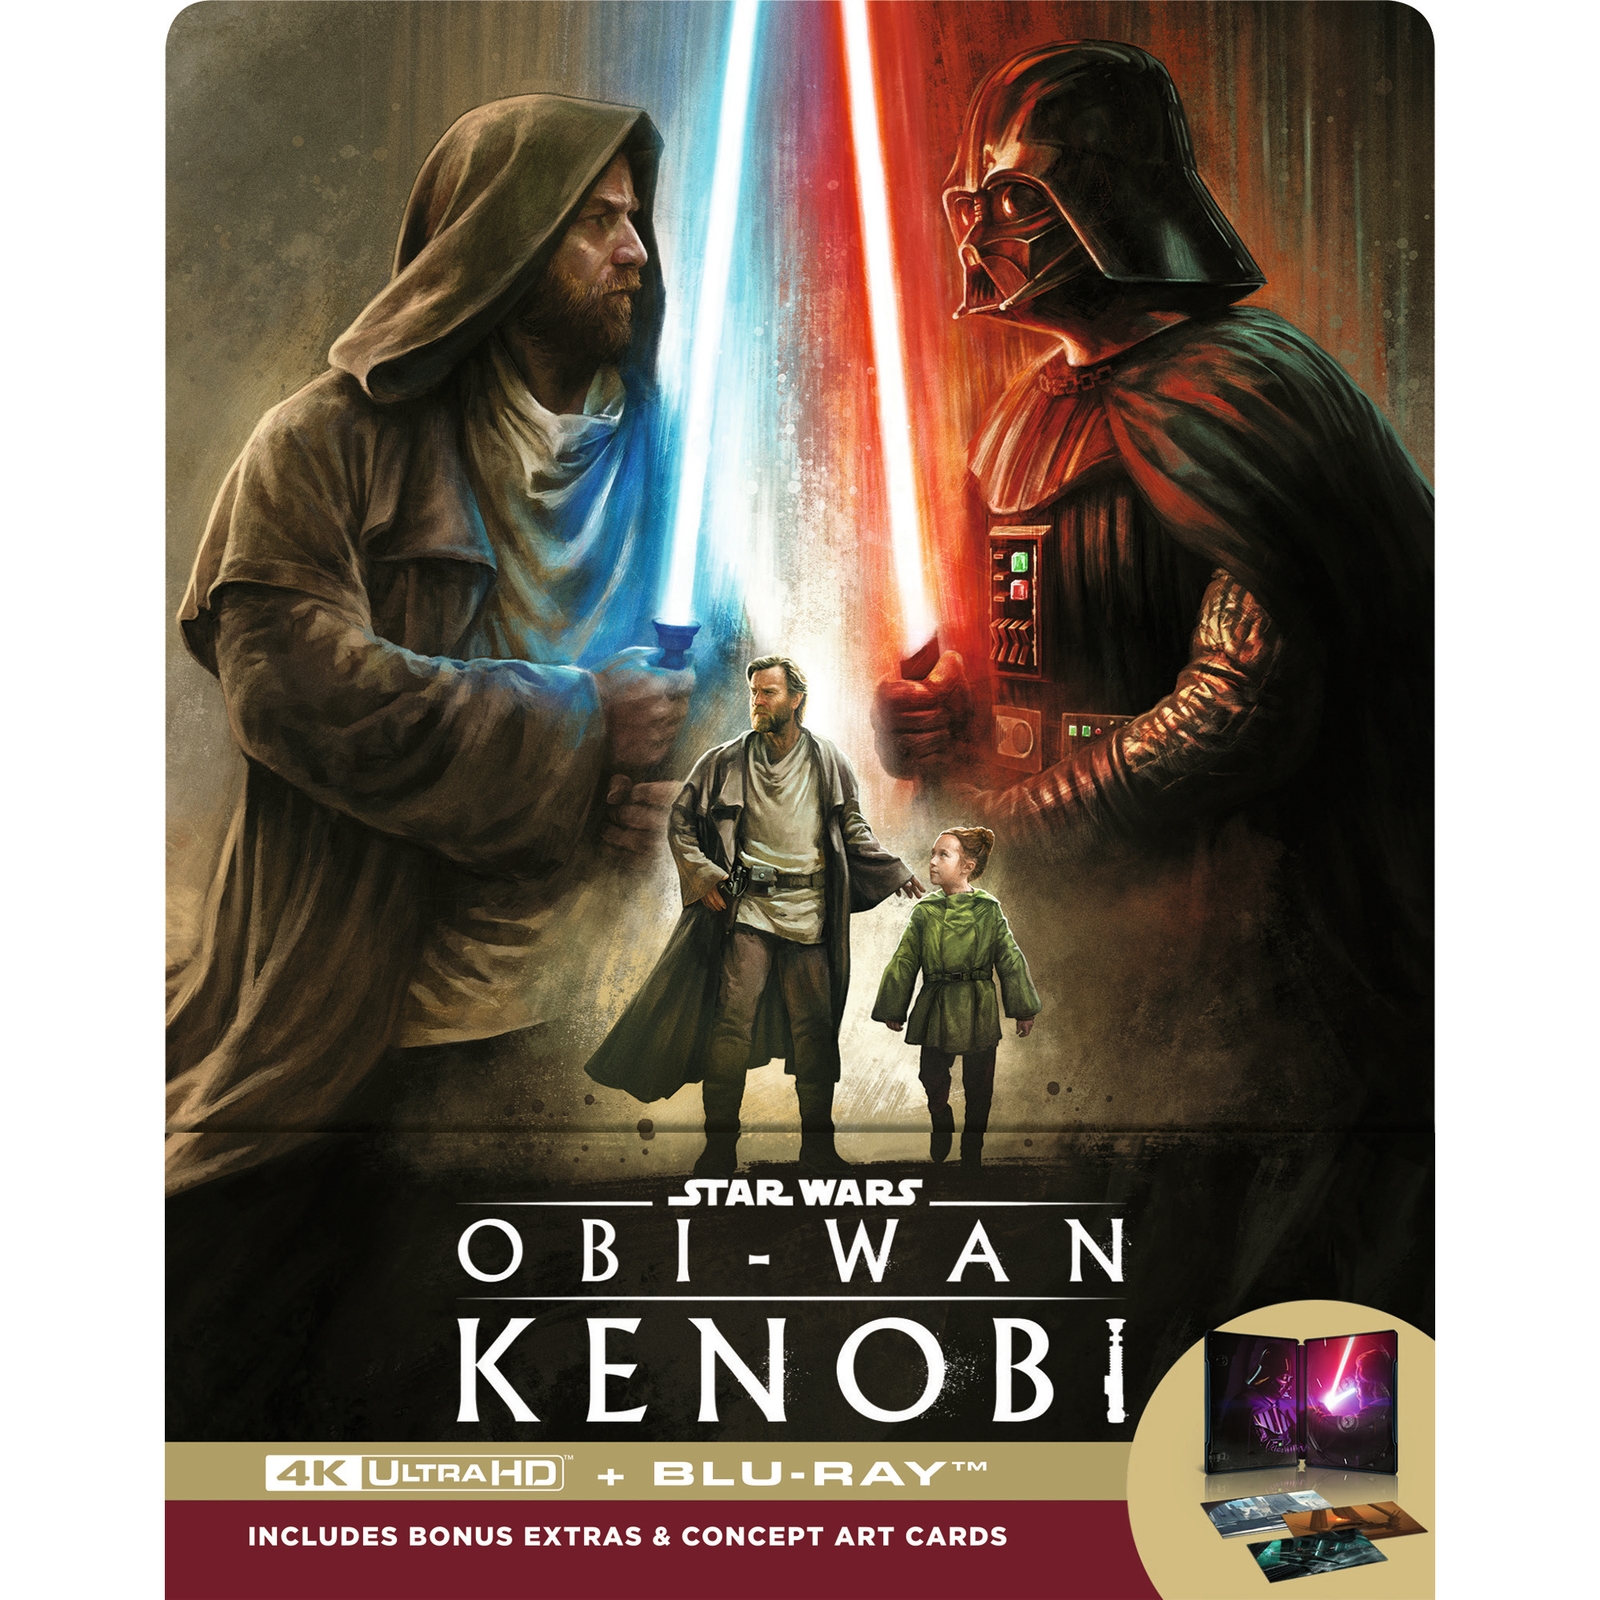 Star Wars Obi-Wan Kenobi SteelBook 4K Ultra HD & Blu-ray (Disney+ Original includes ArtCards) von Star Wars